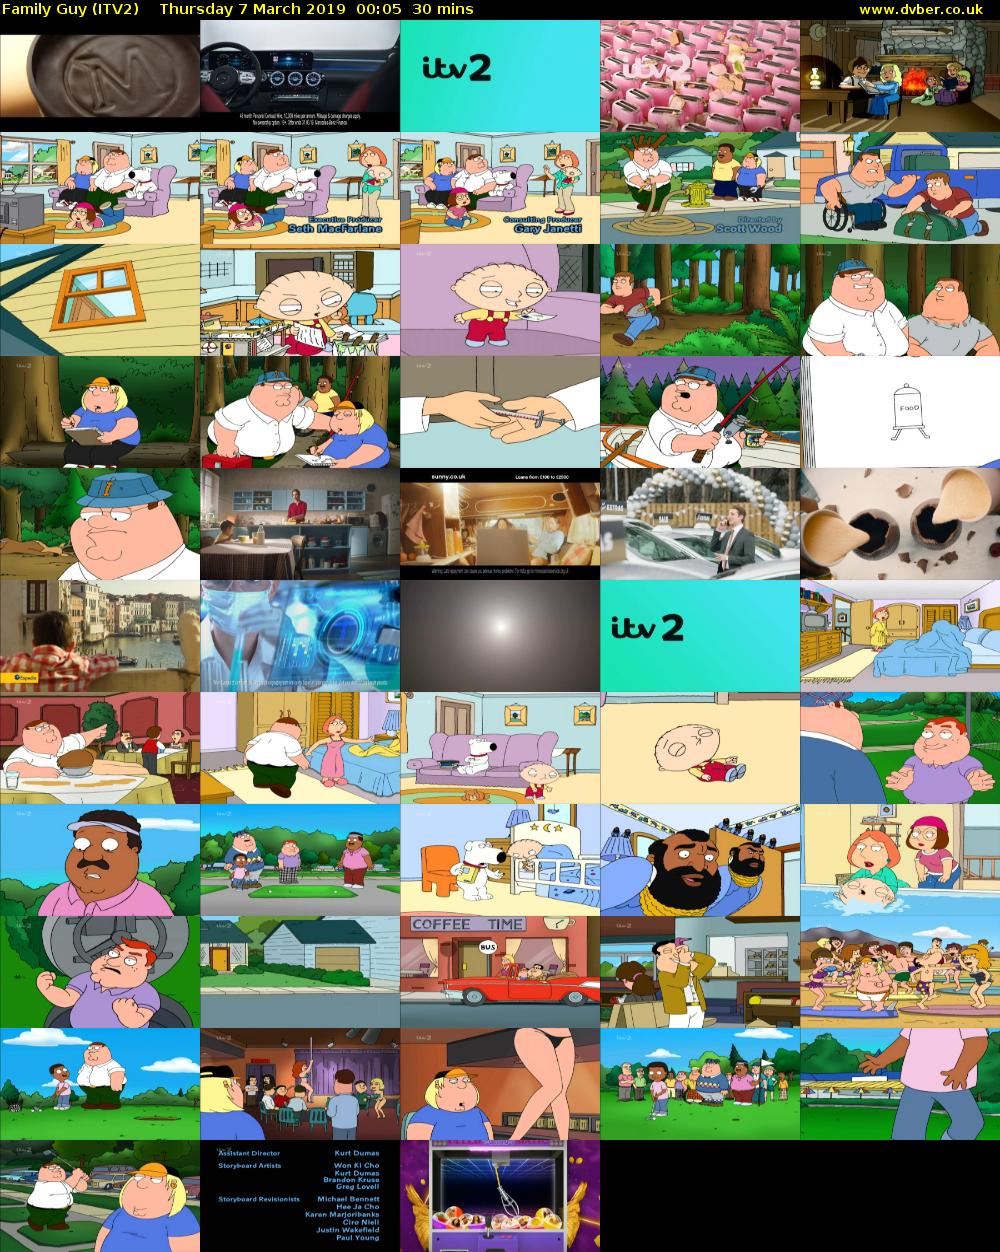 Family Guy (ITV2) Thursday 7 March 2019 00:05 - 00:35